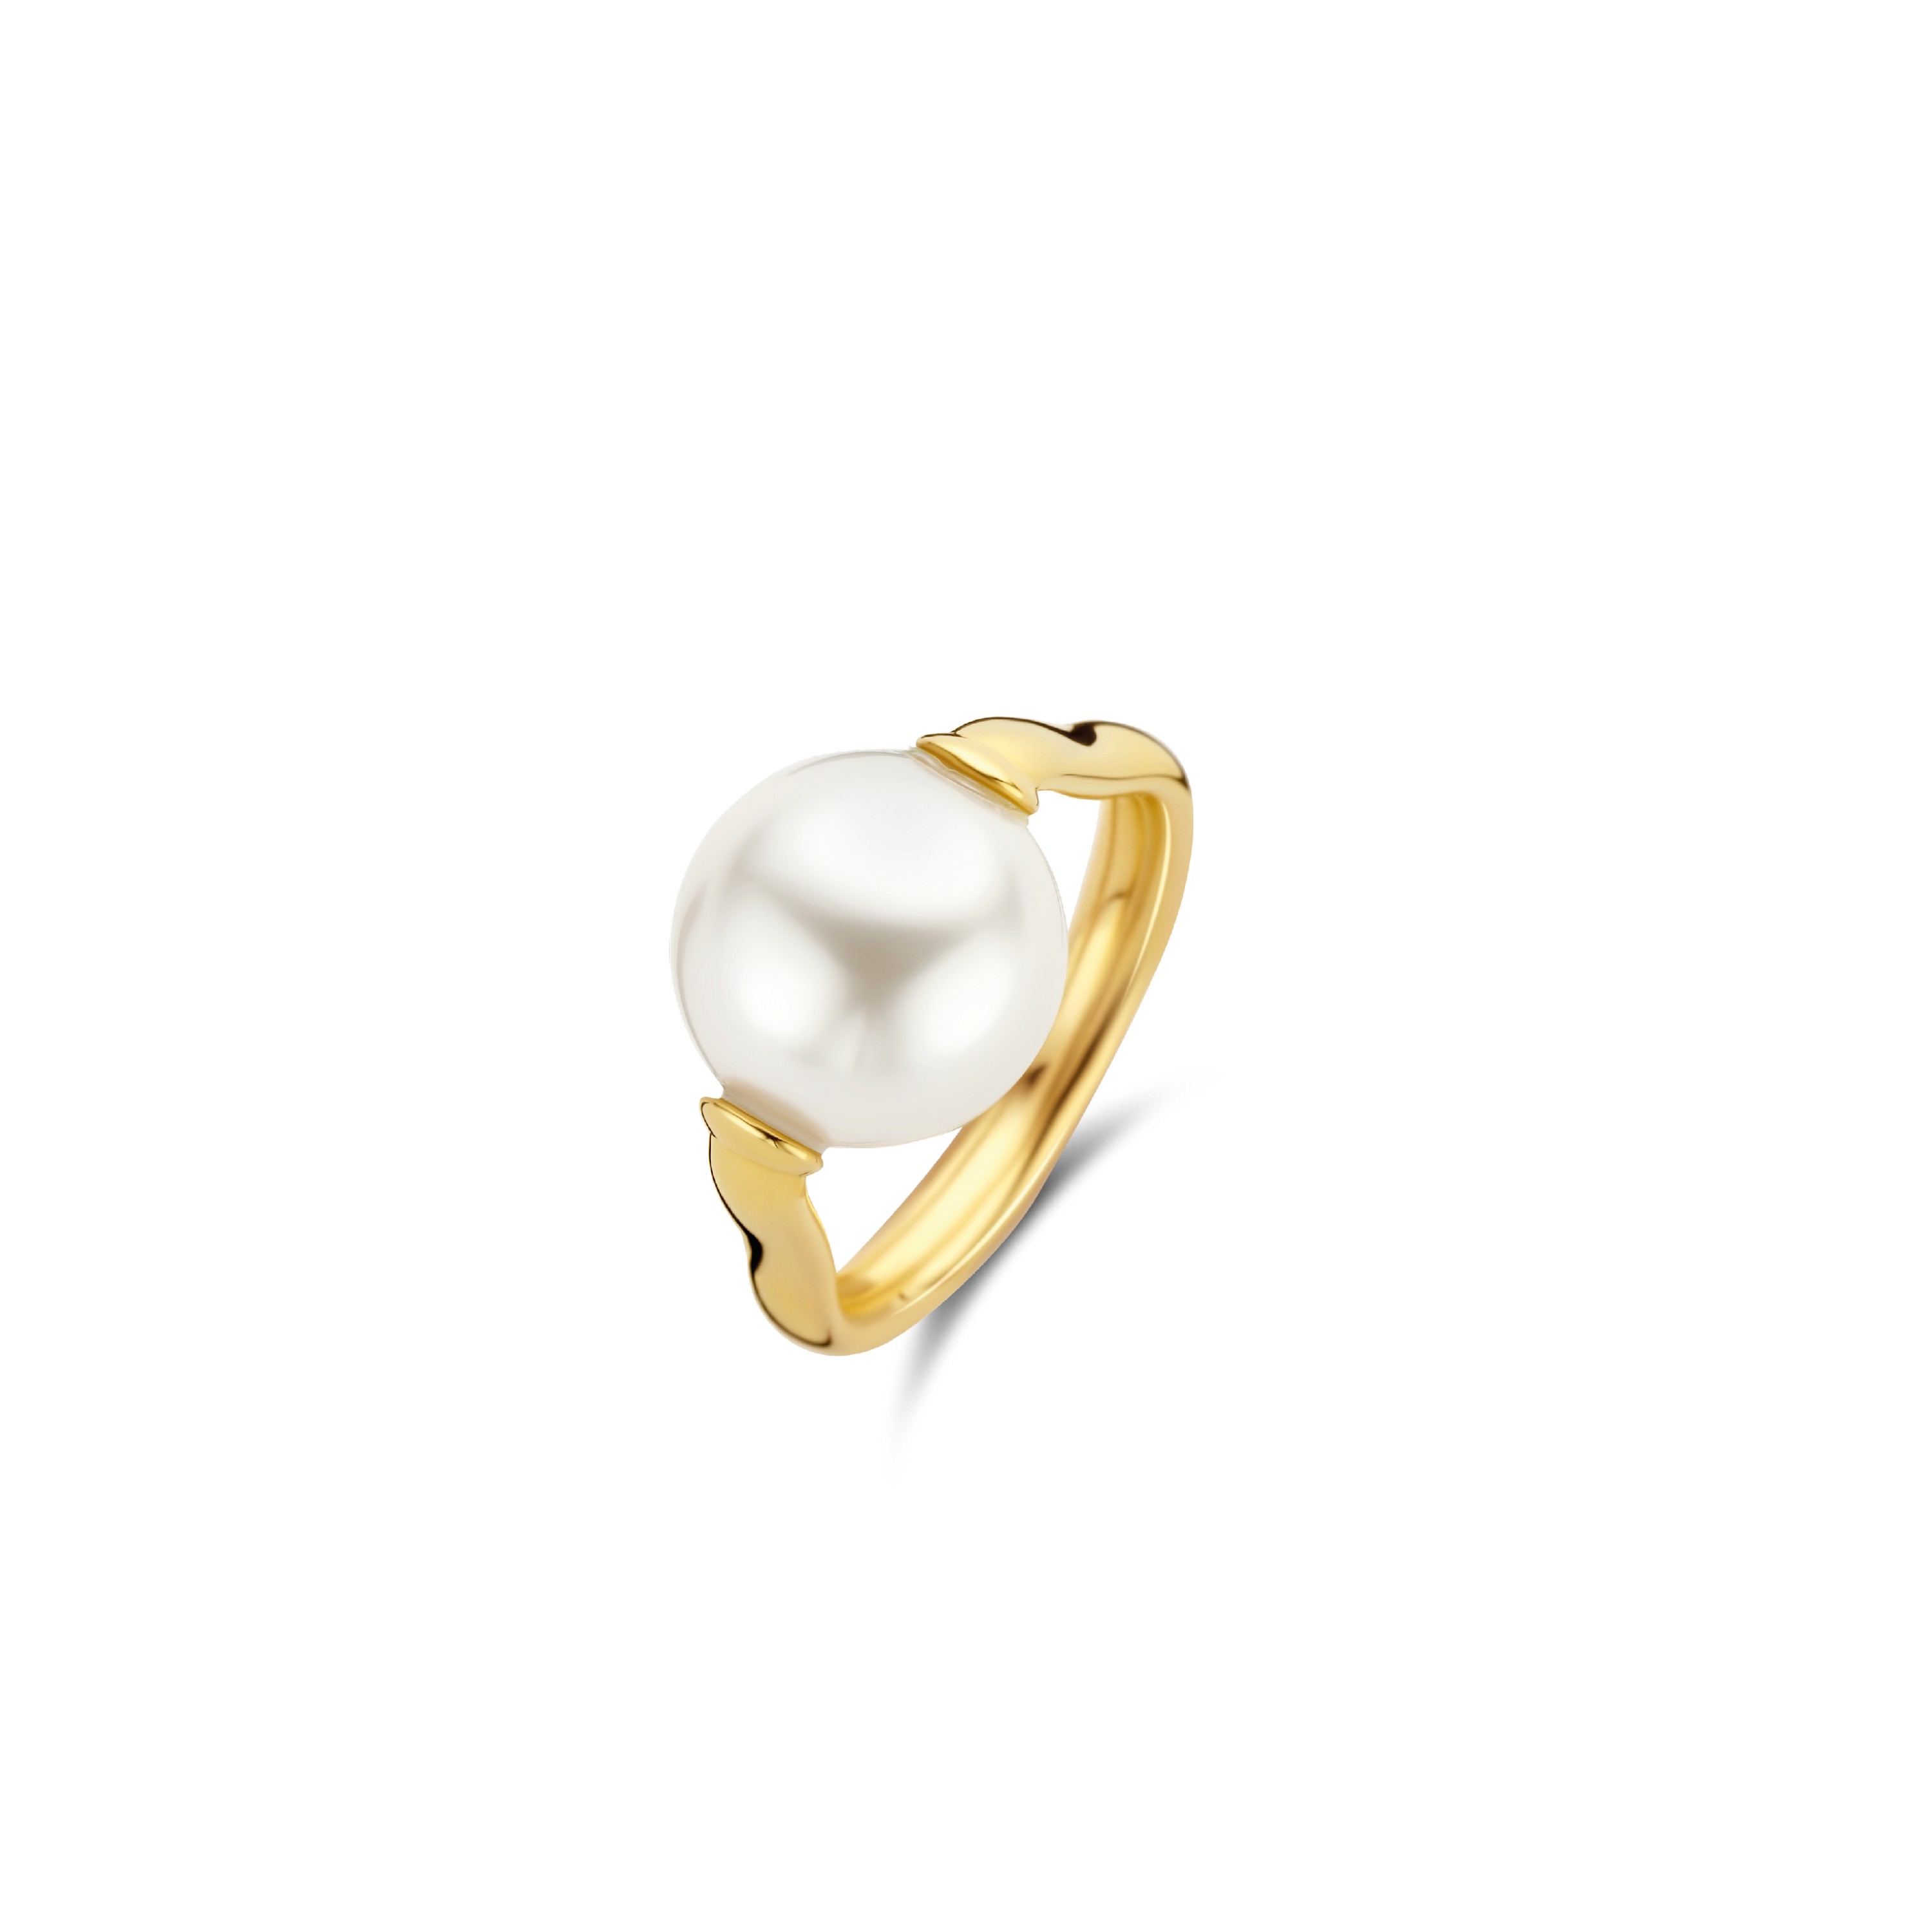 TI SENTO - Milano Ring 12231PW Gala Jewelers Inc. White Oak, PA